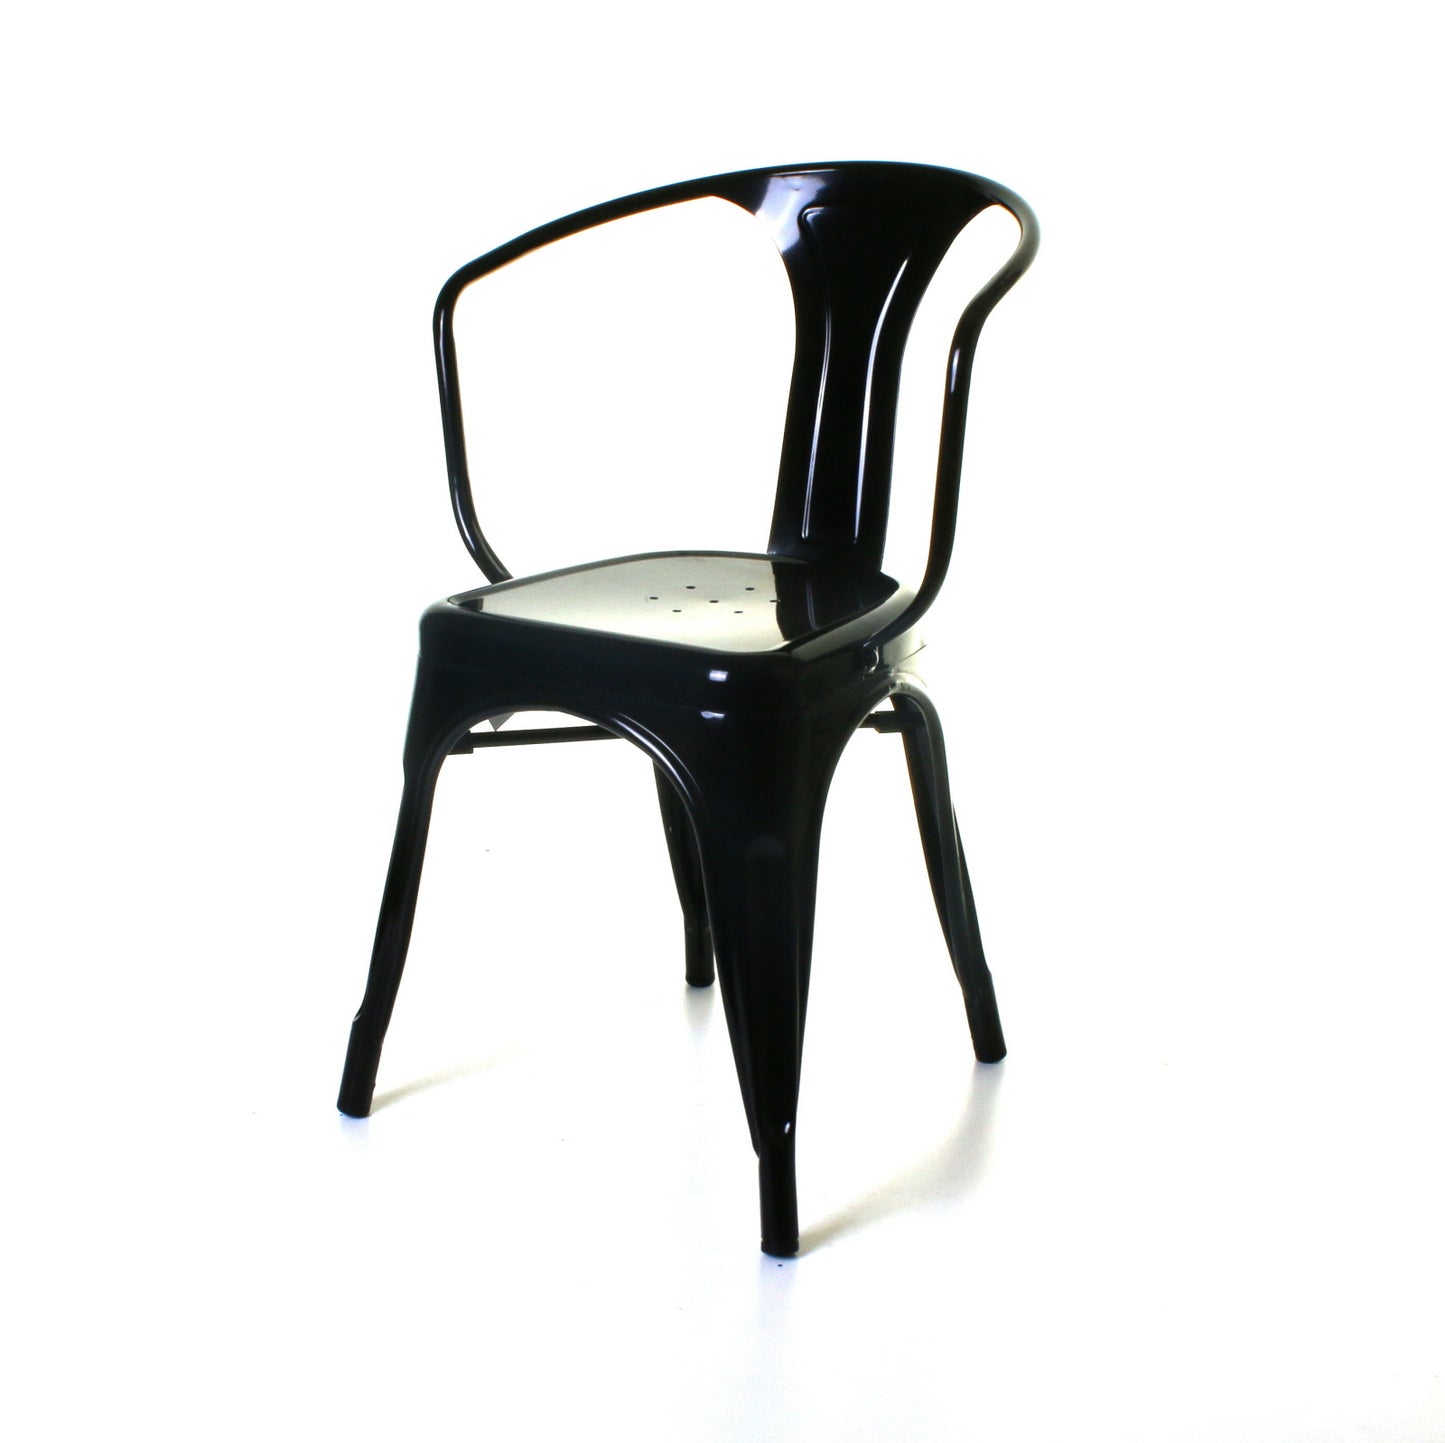 5PC Prato Table, 2 Forli Chairs & 2 Castel Stools Set - Black